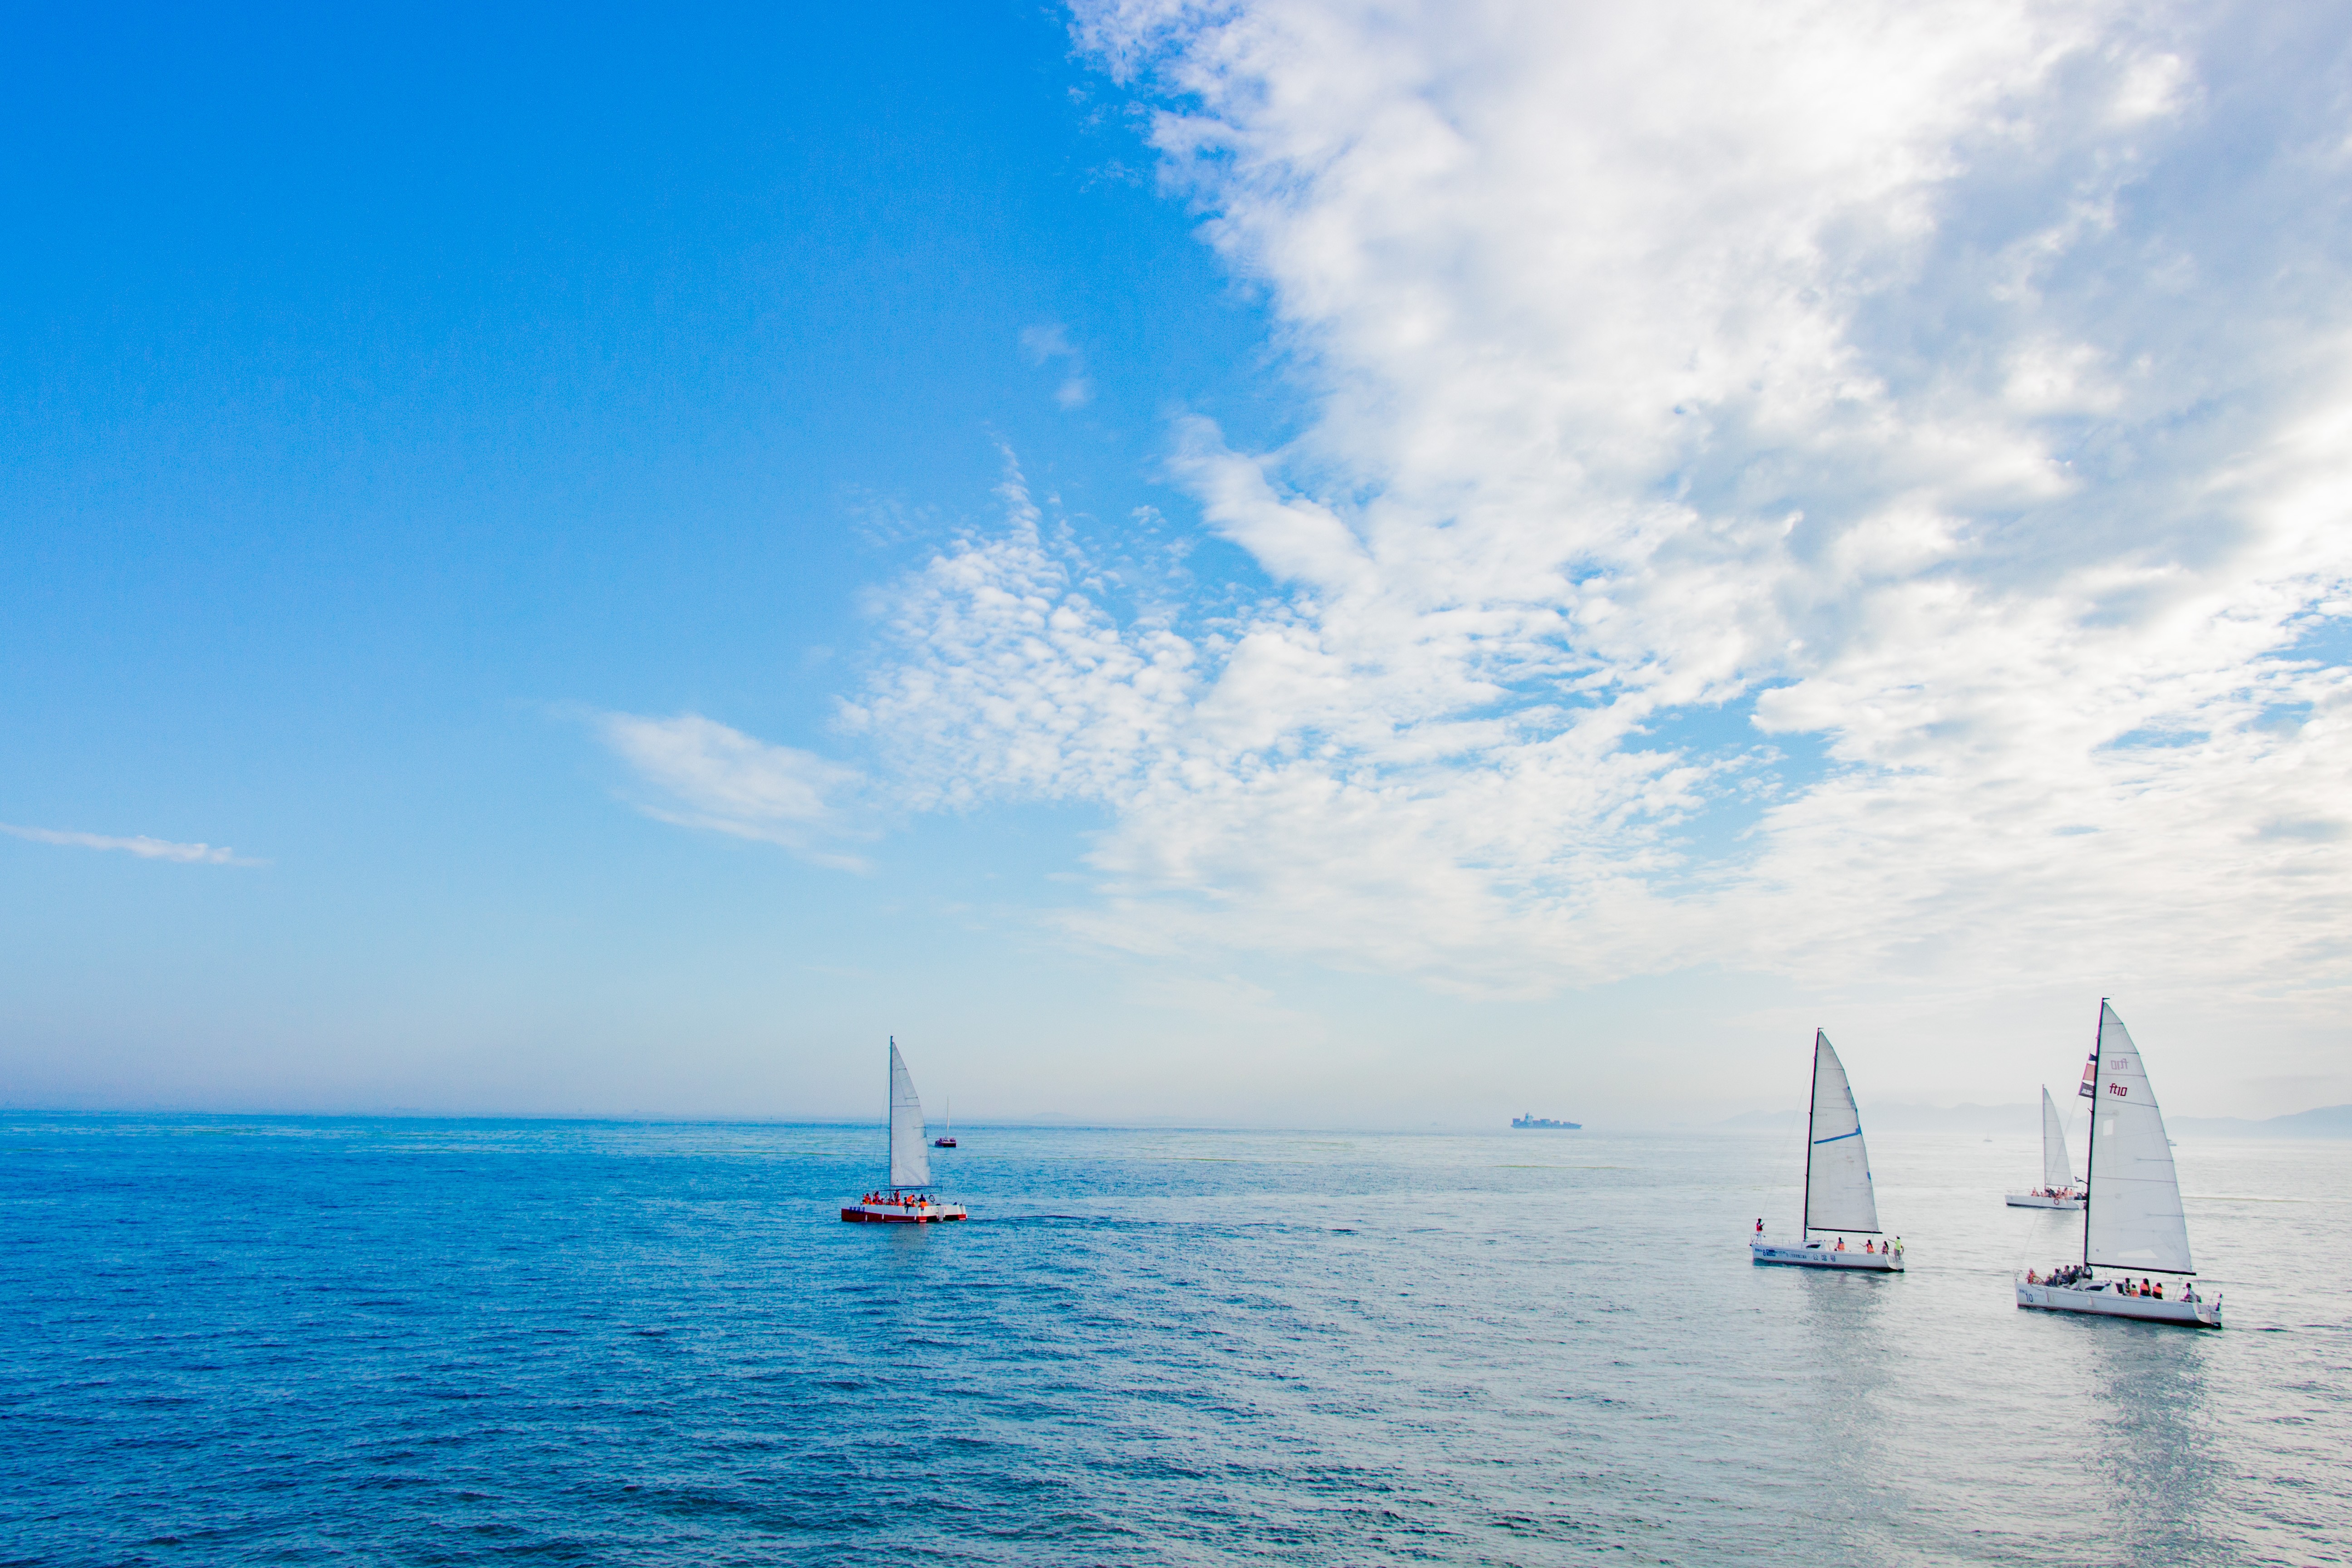 General 5184x3456 sea sailing ship sky water blue sailboats vehicle clouds horizon